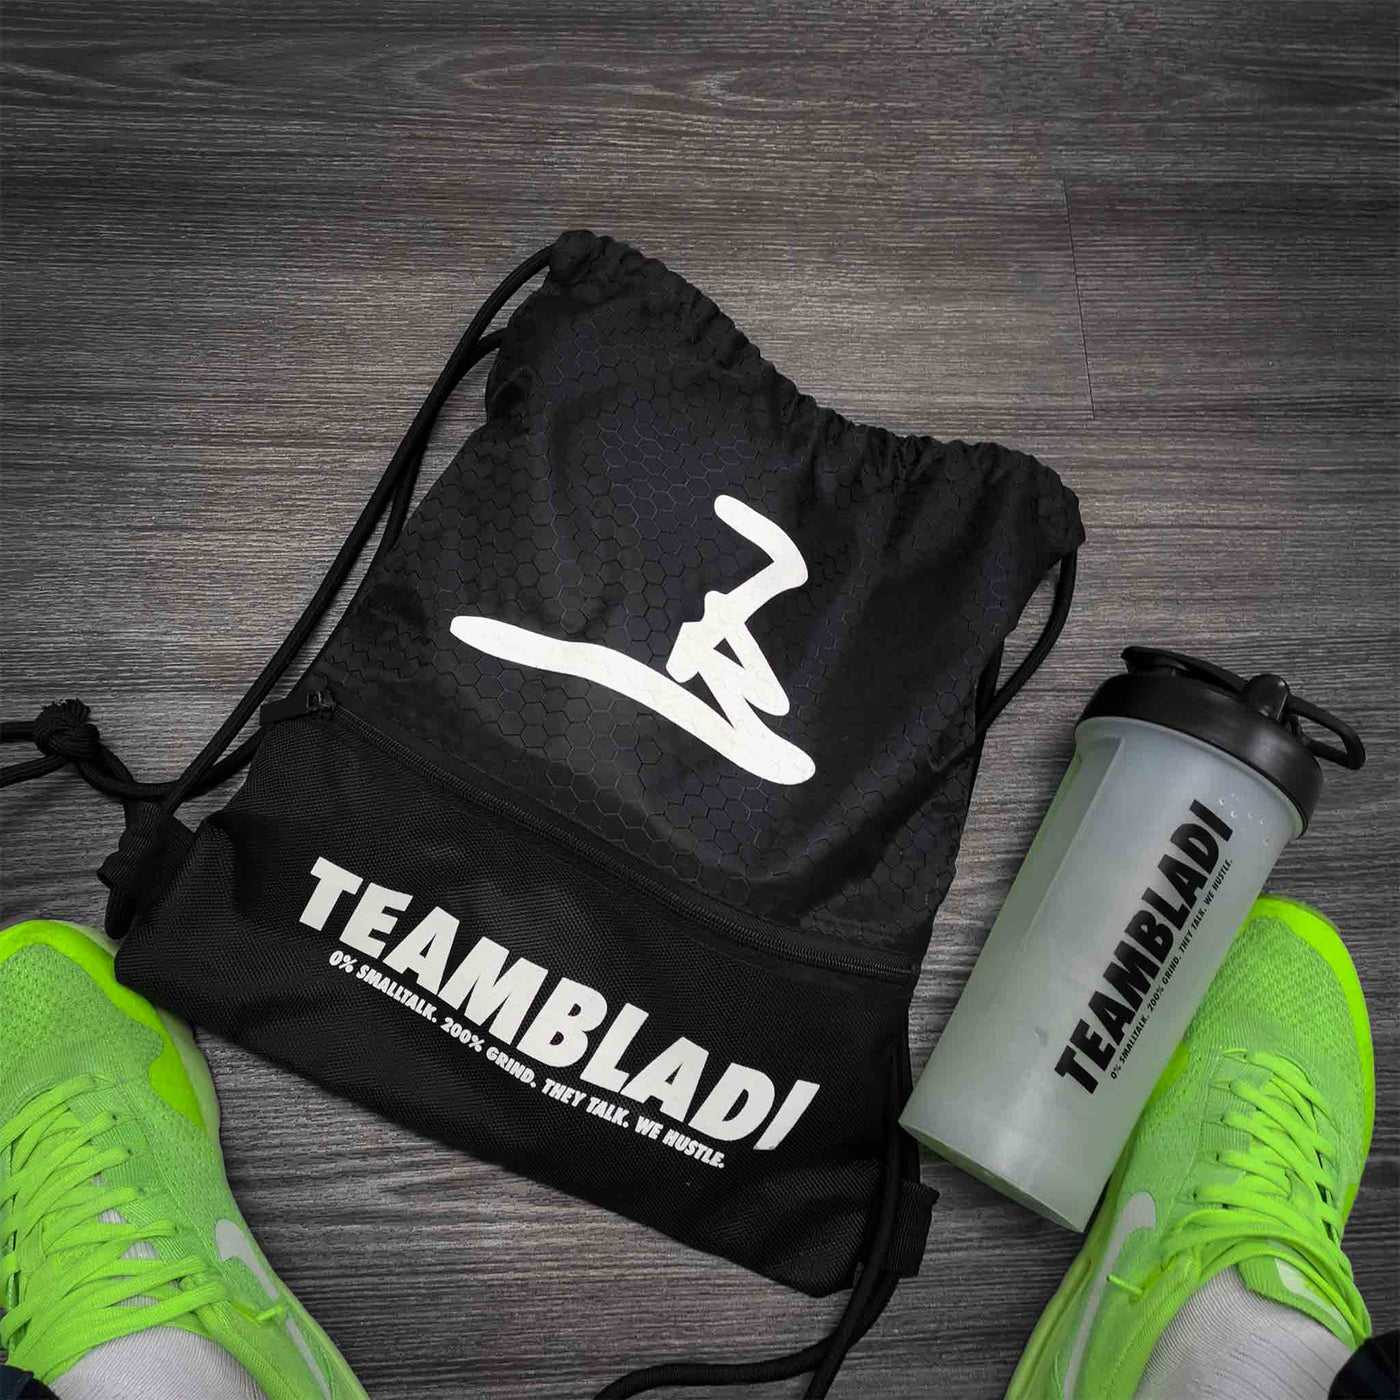 Teambladi Gym Bag Black